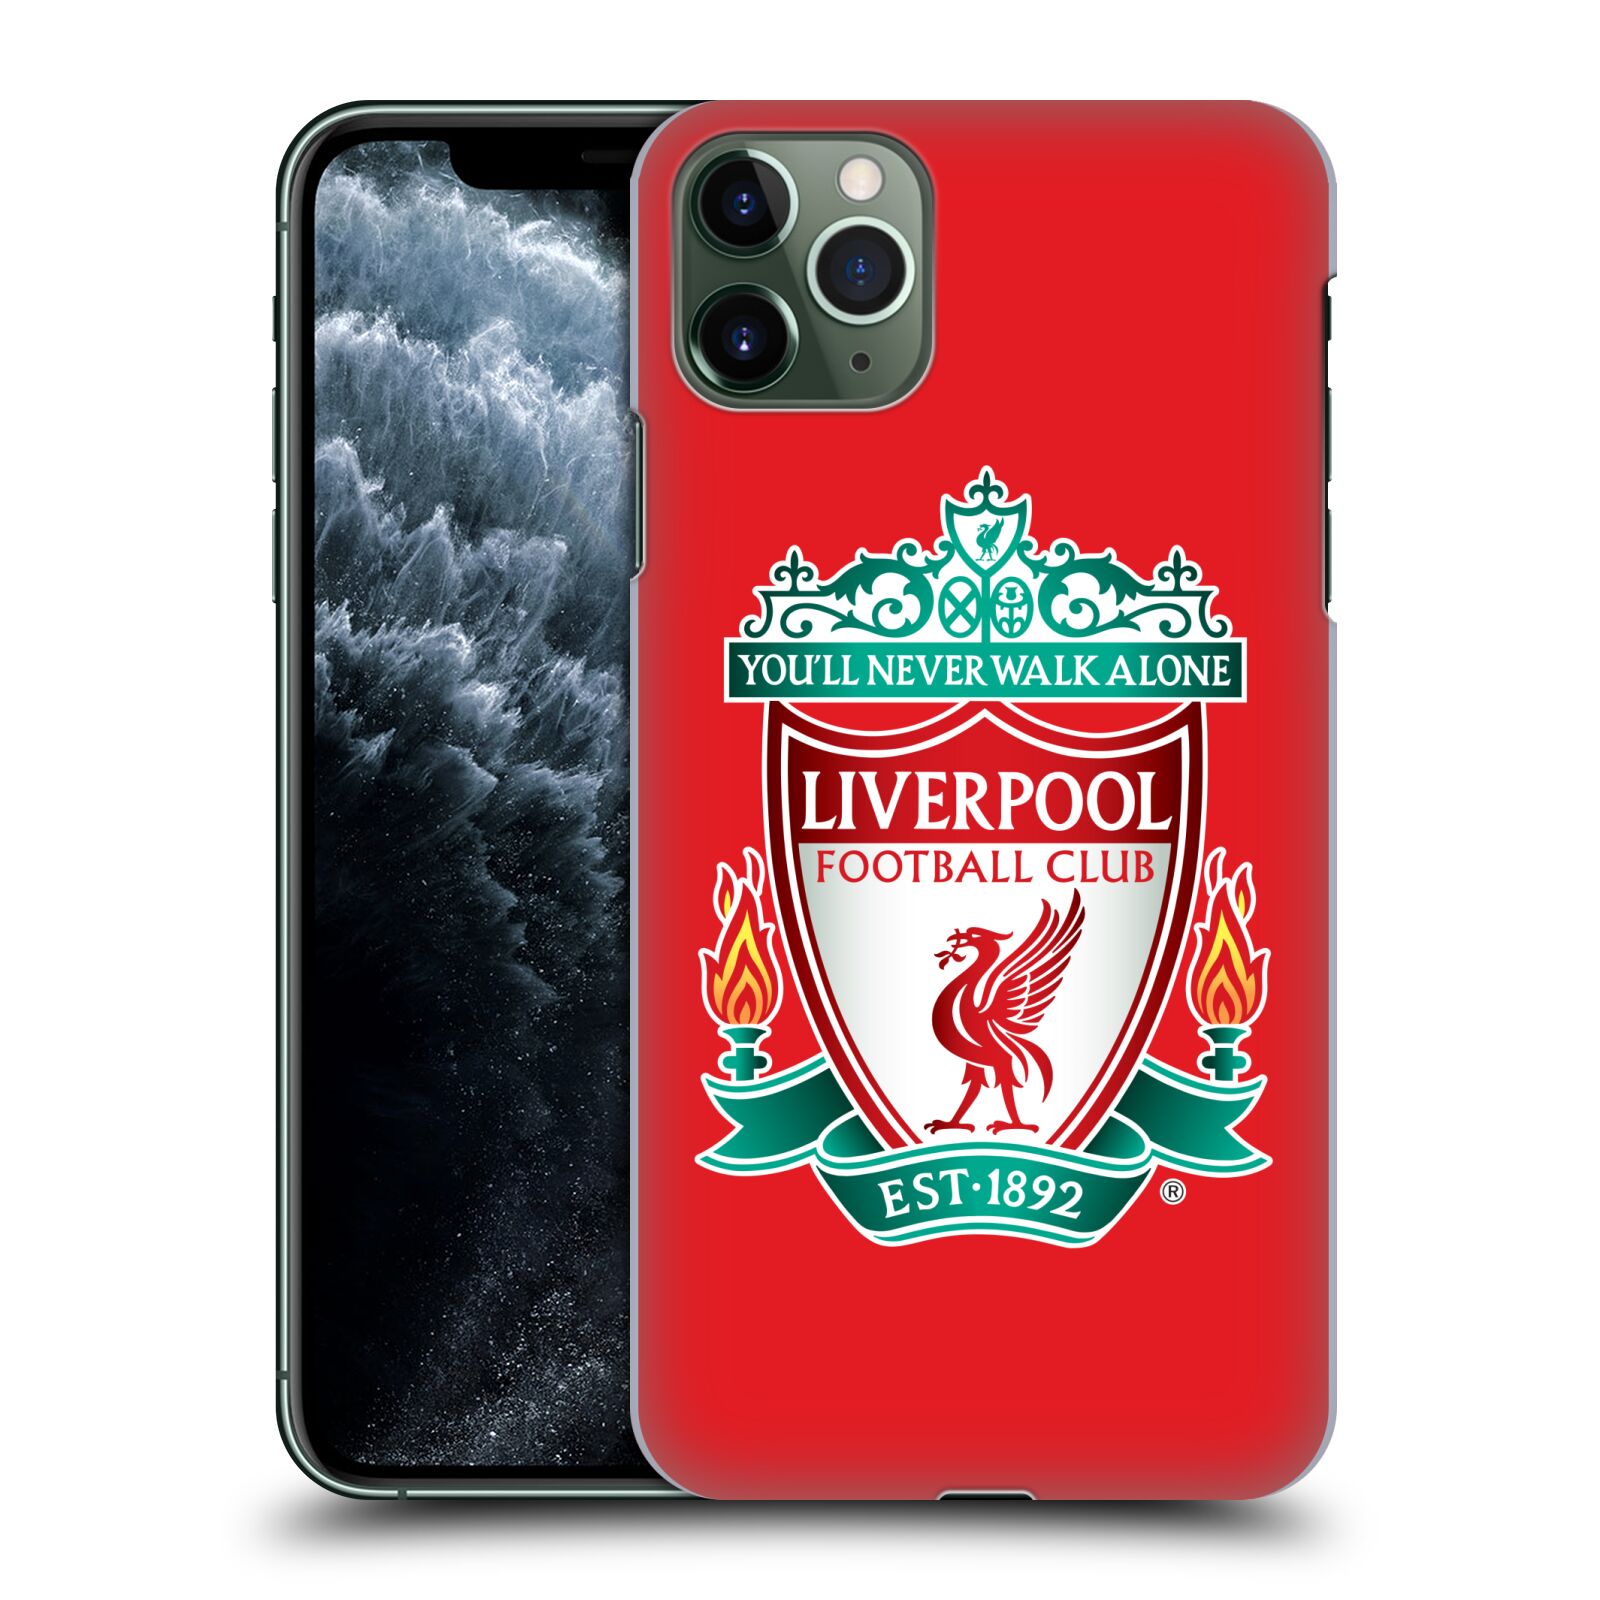 Pouzdro na mobil Apple Iphone 11 PRO MAX - HEAD CASE - Fotbalový klub Liverpool barevný znak červené pozadí